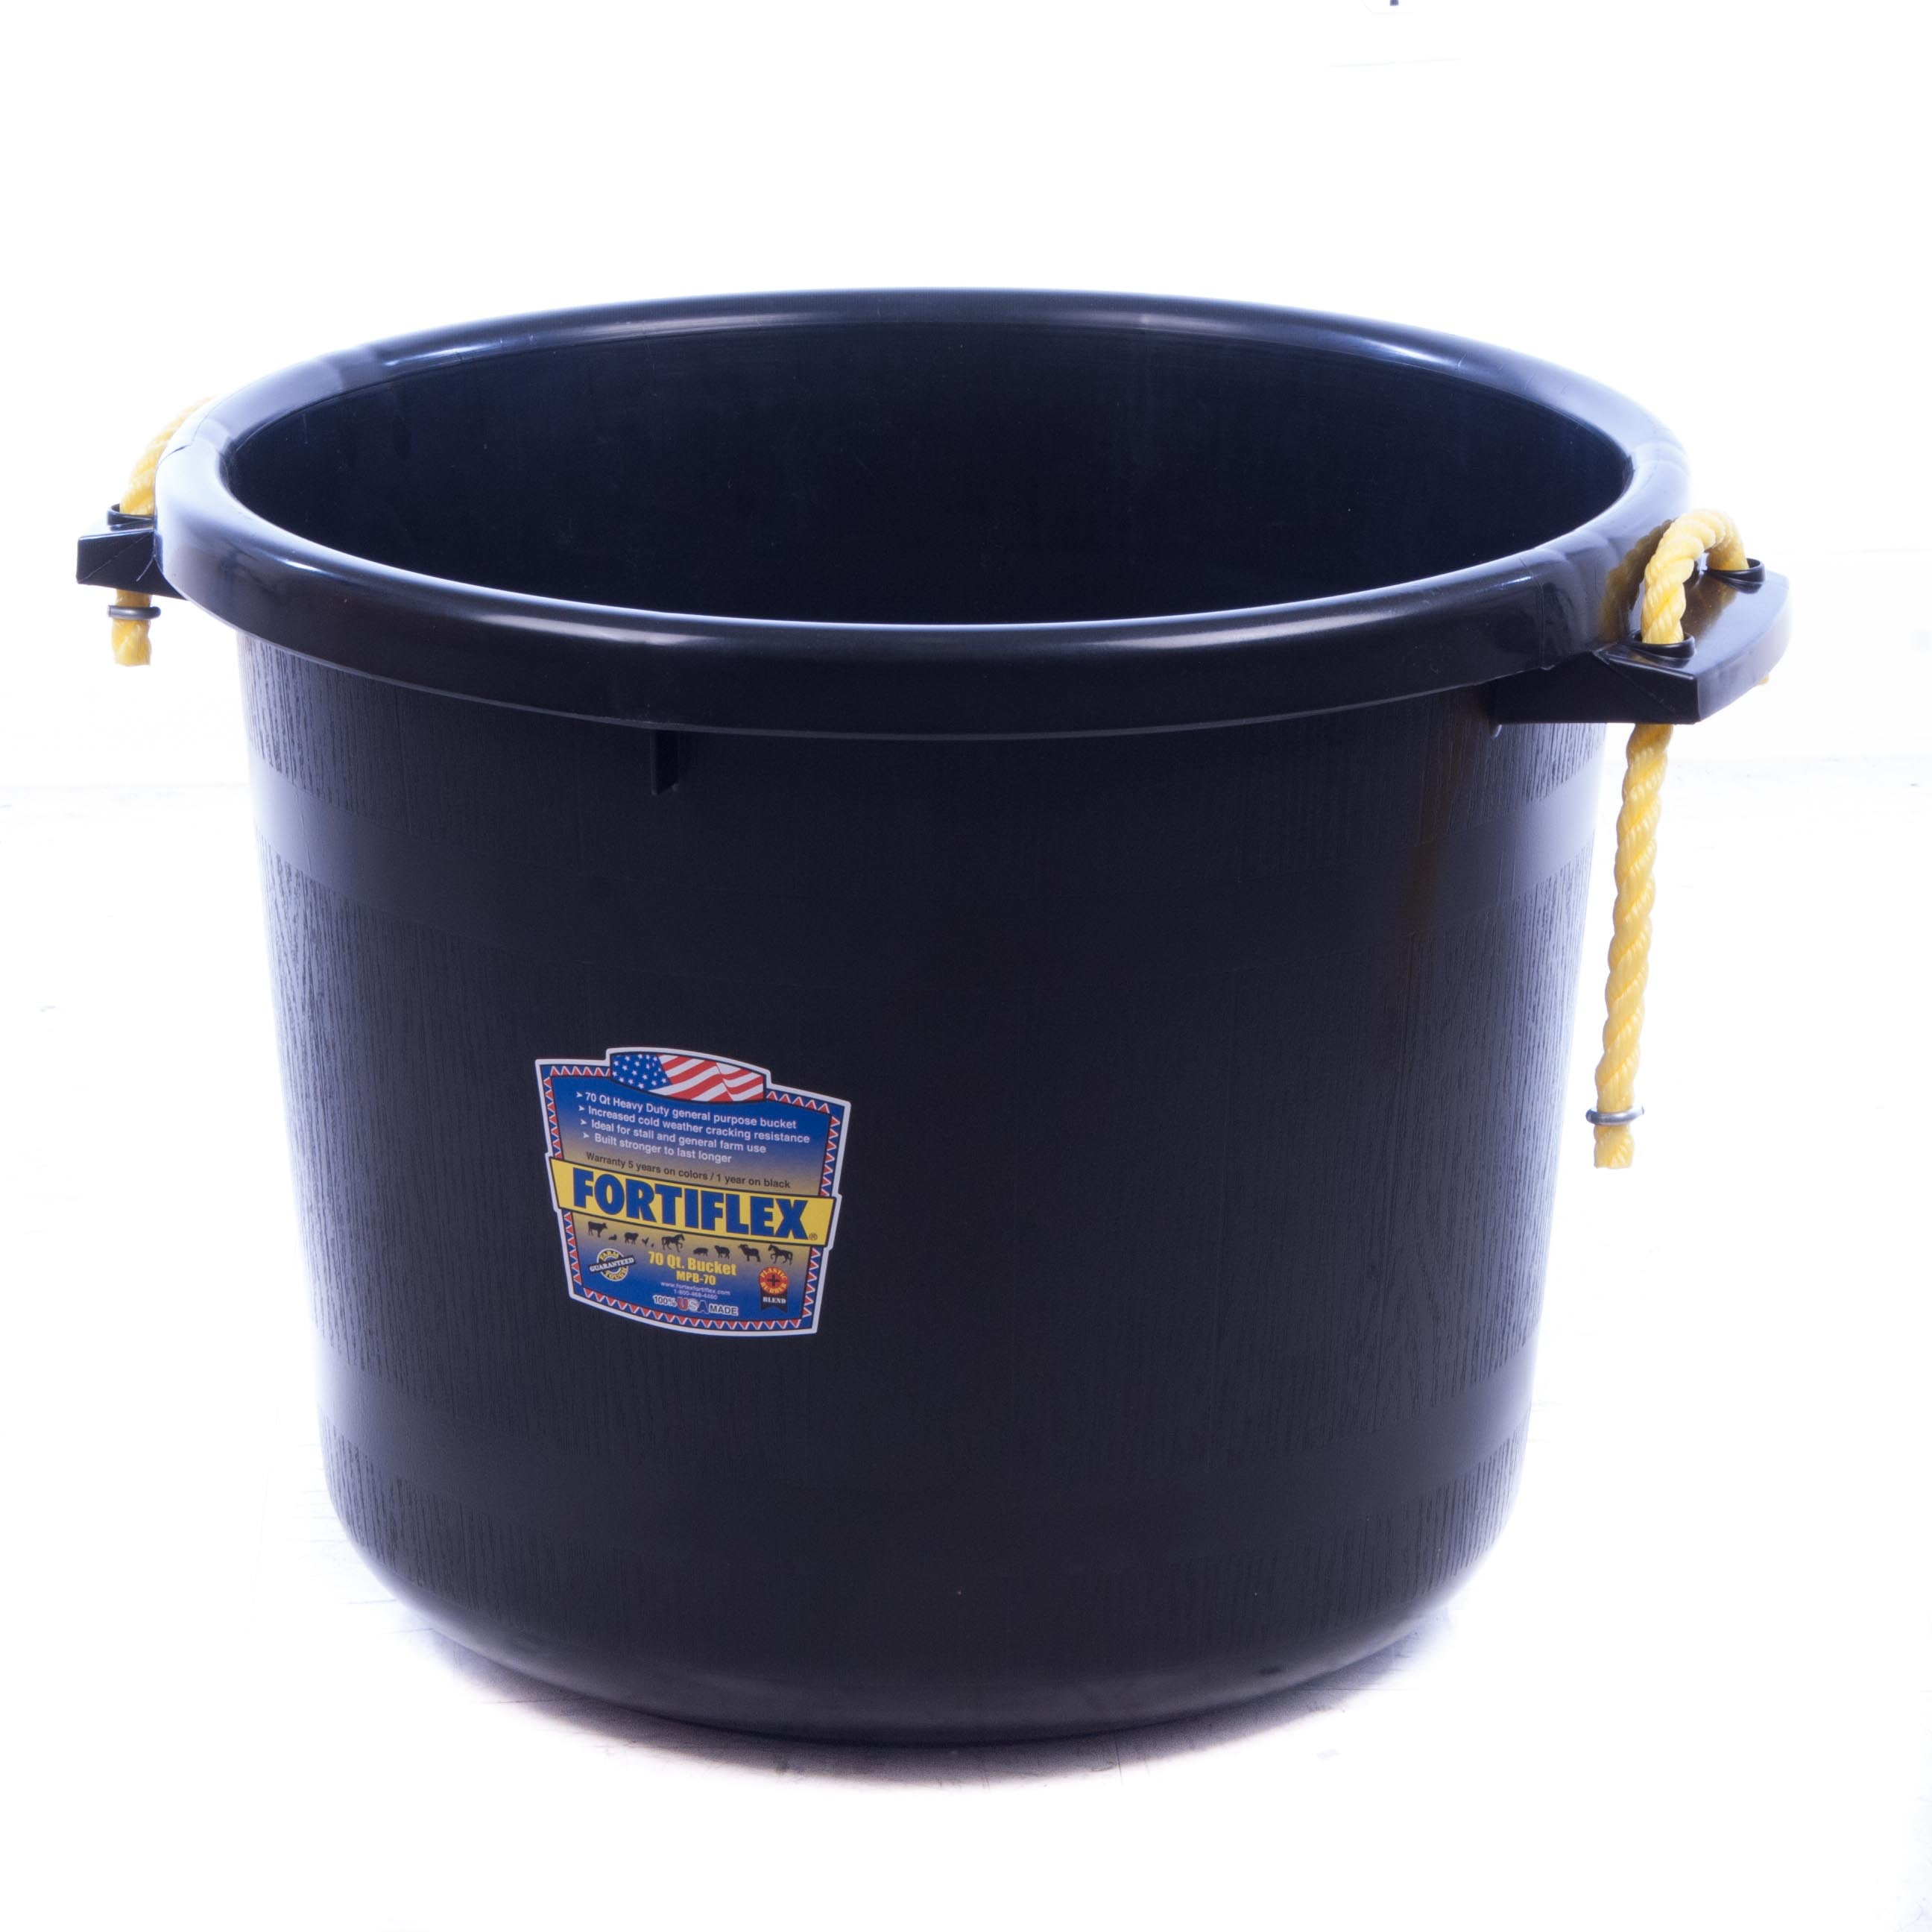 JTWEEN Collapsible Bucket with Handle, 5 Gallon Bucket(20L), Portable  Camping Bucket, Ultra Lightweight Outdoor Basin Fishing Bucket, Folding  Bucket